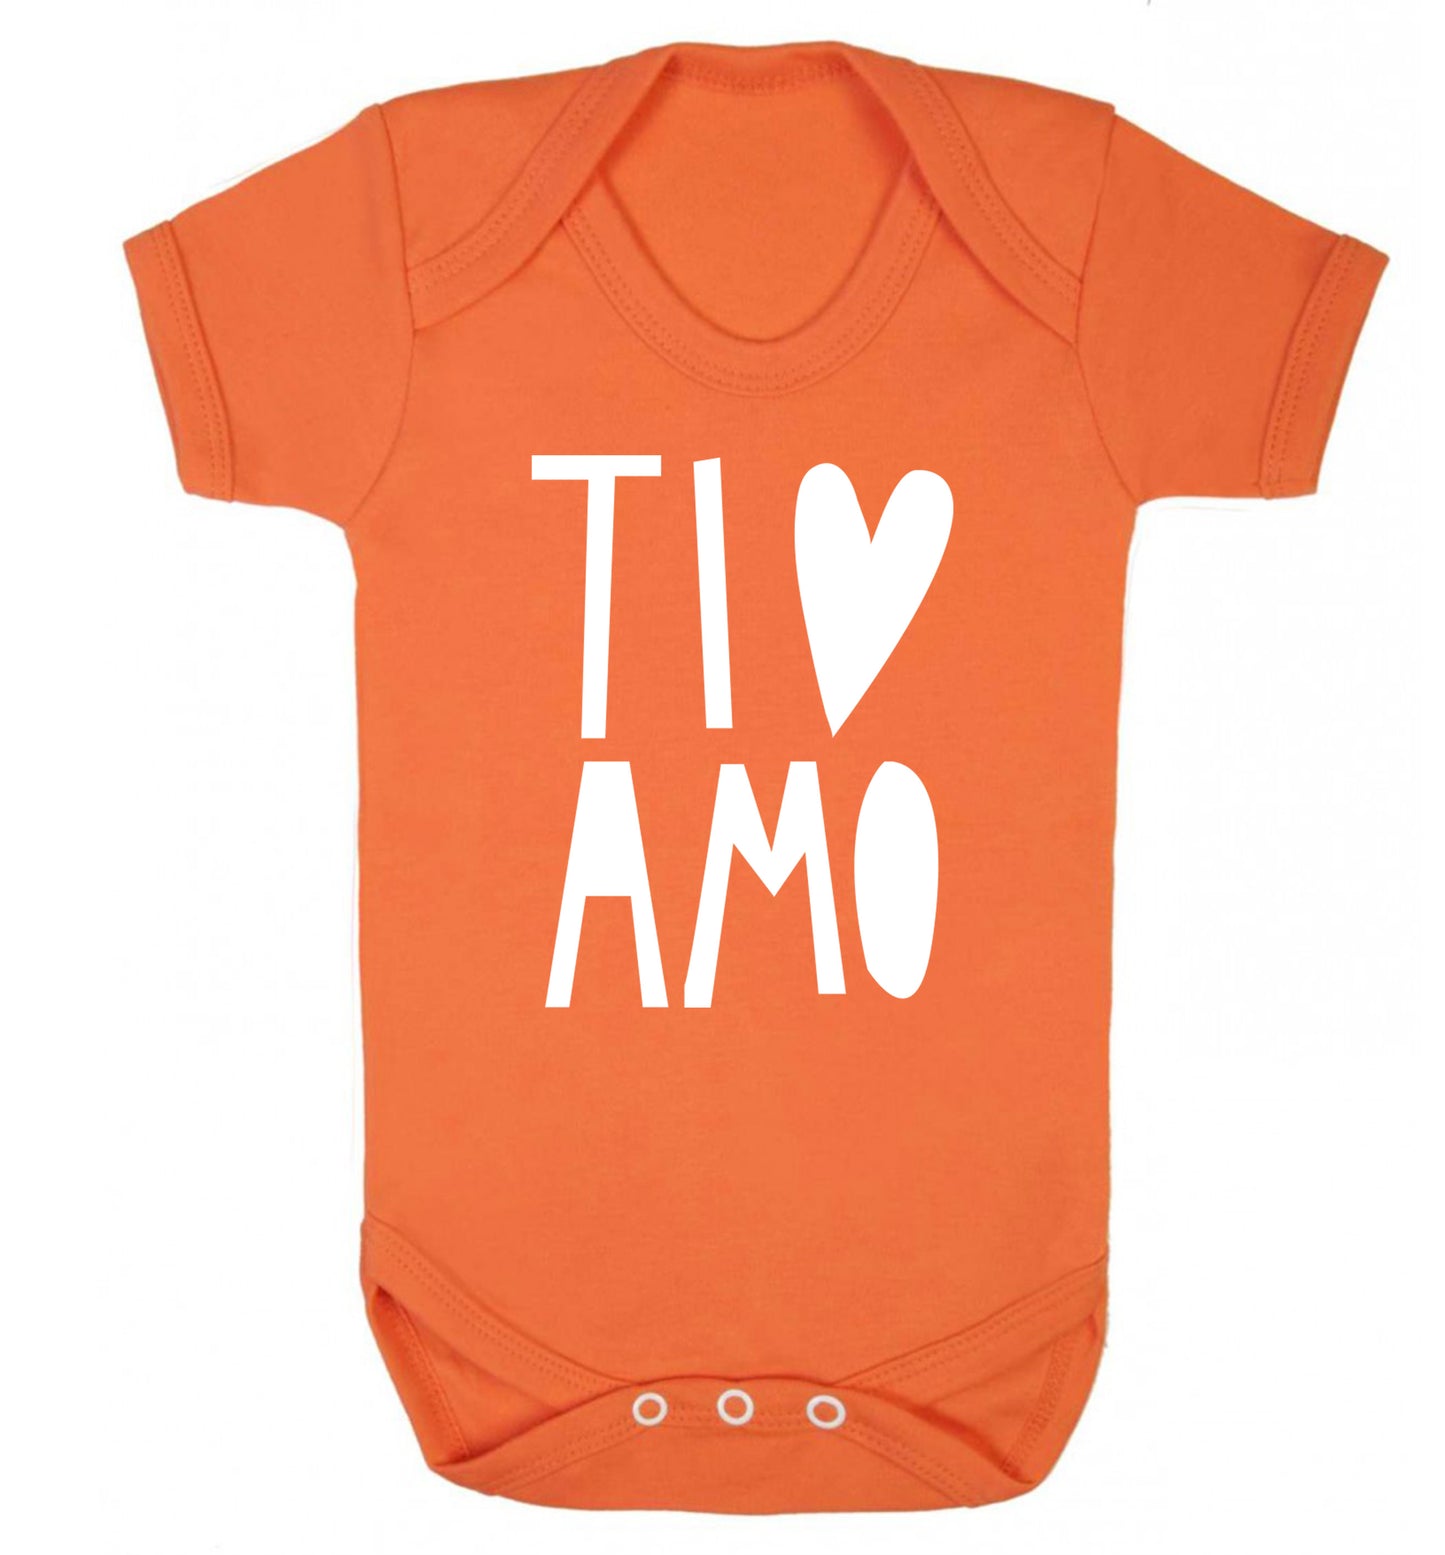 Ti amo - I love you Baby Vest orange 18-24 months